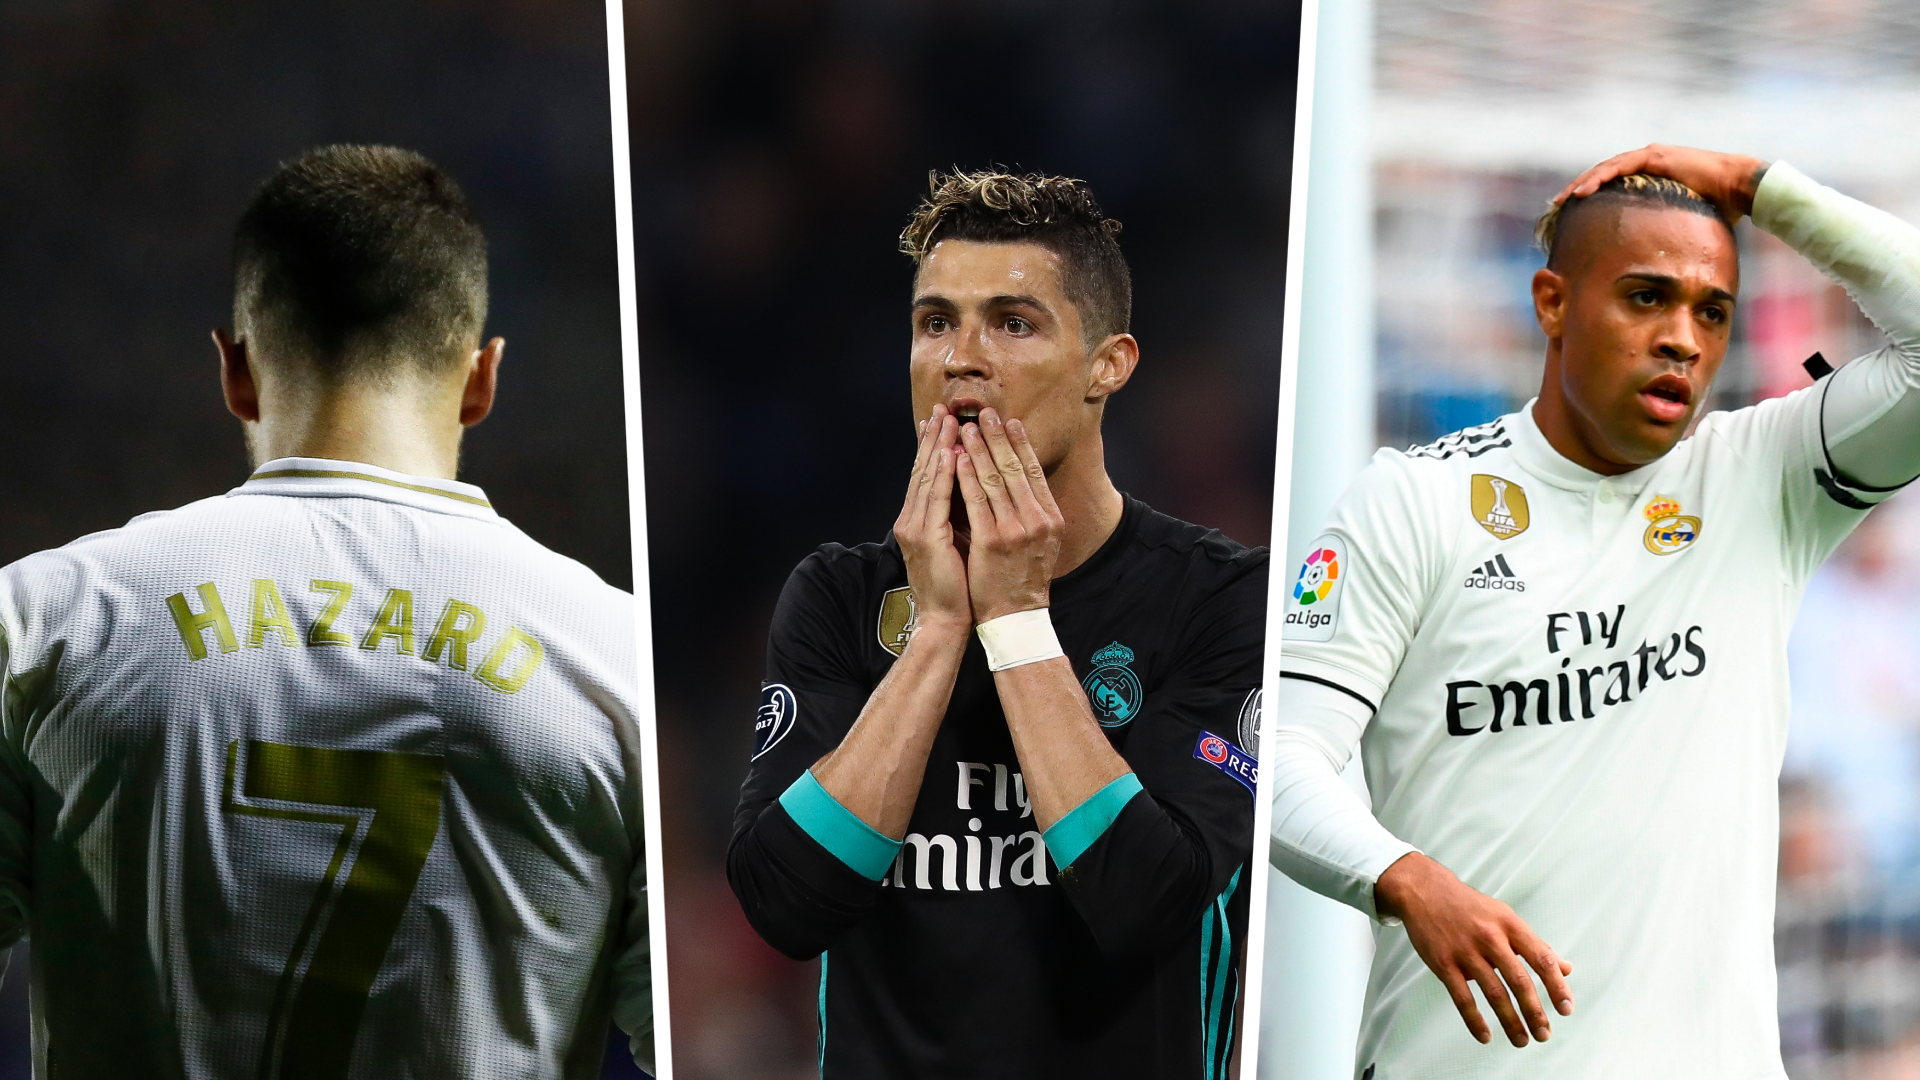 Real Madrid: La camiseta de Cristiano Ronaldo se vende pero menos